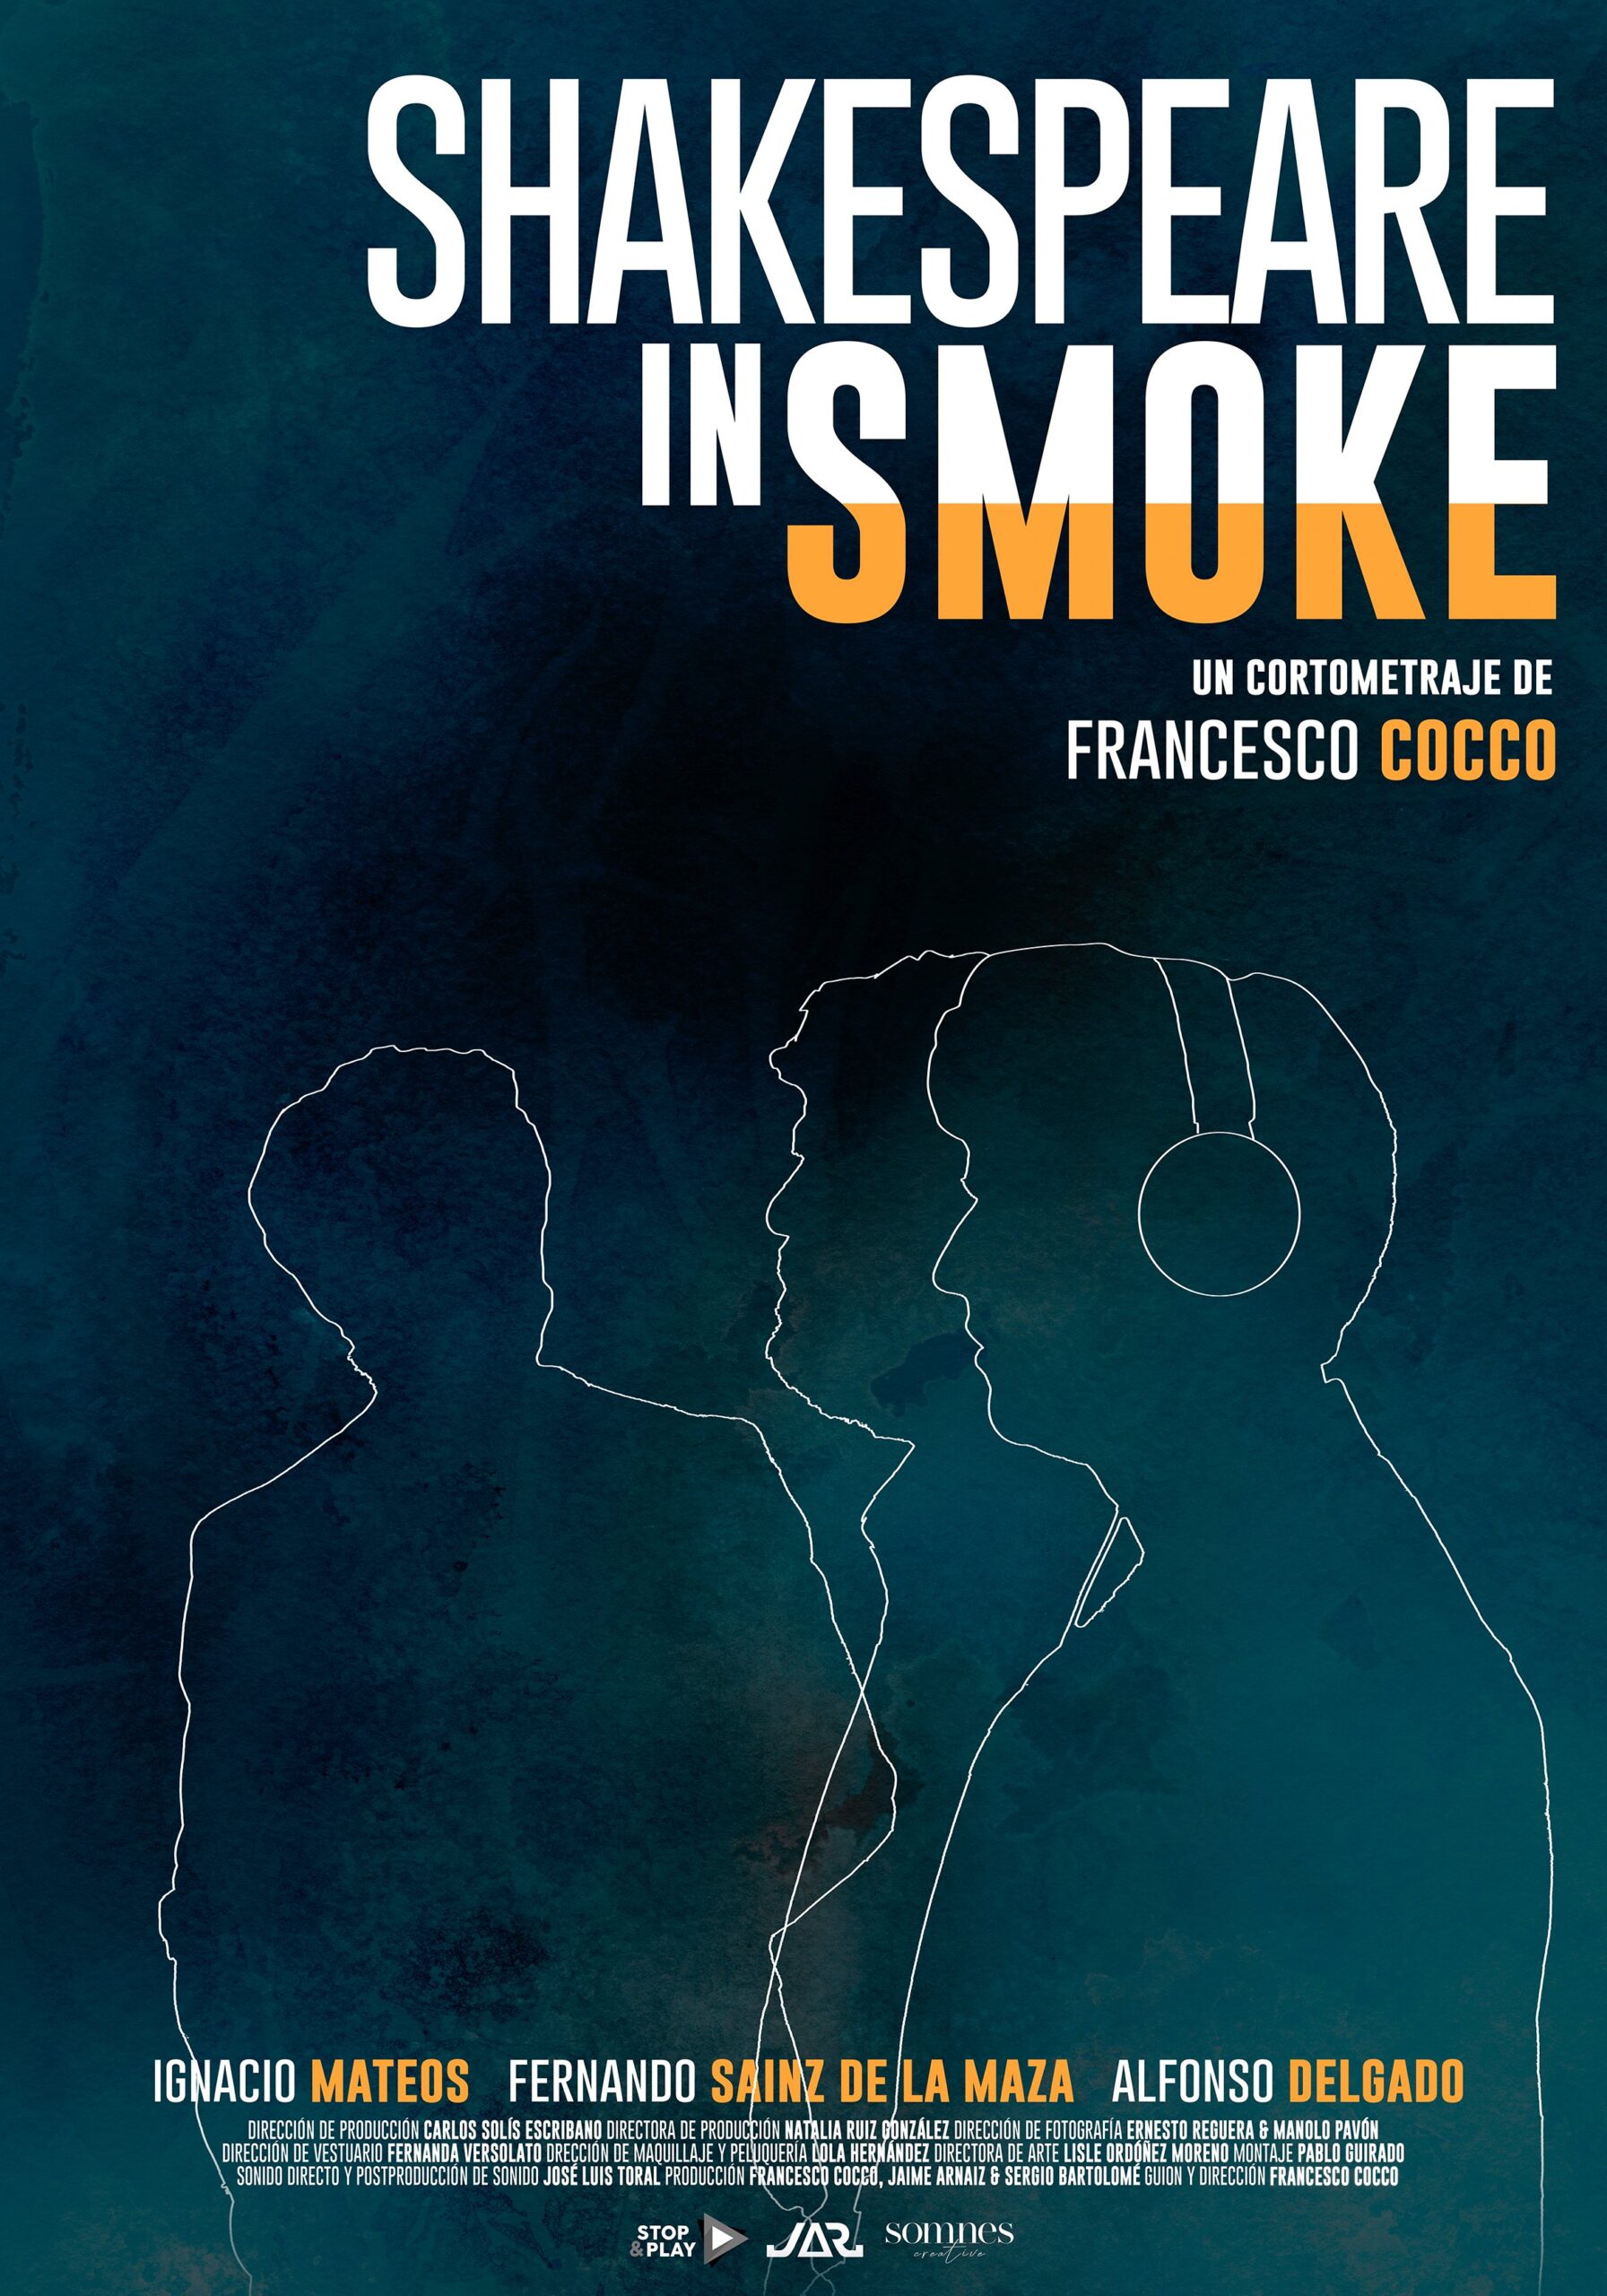 Shakespeare in the smoke - Francesco Cocco